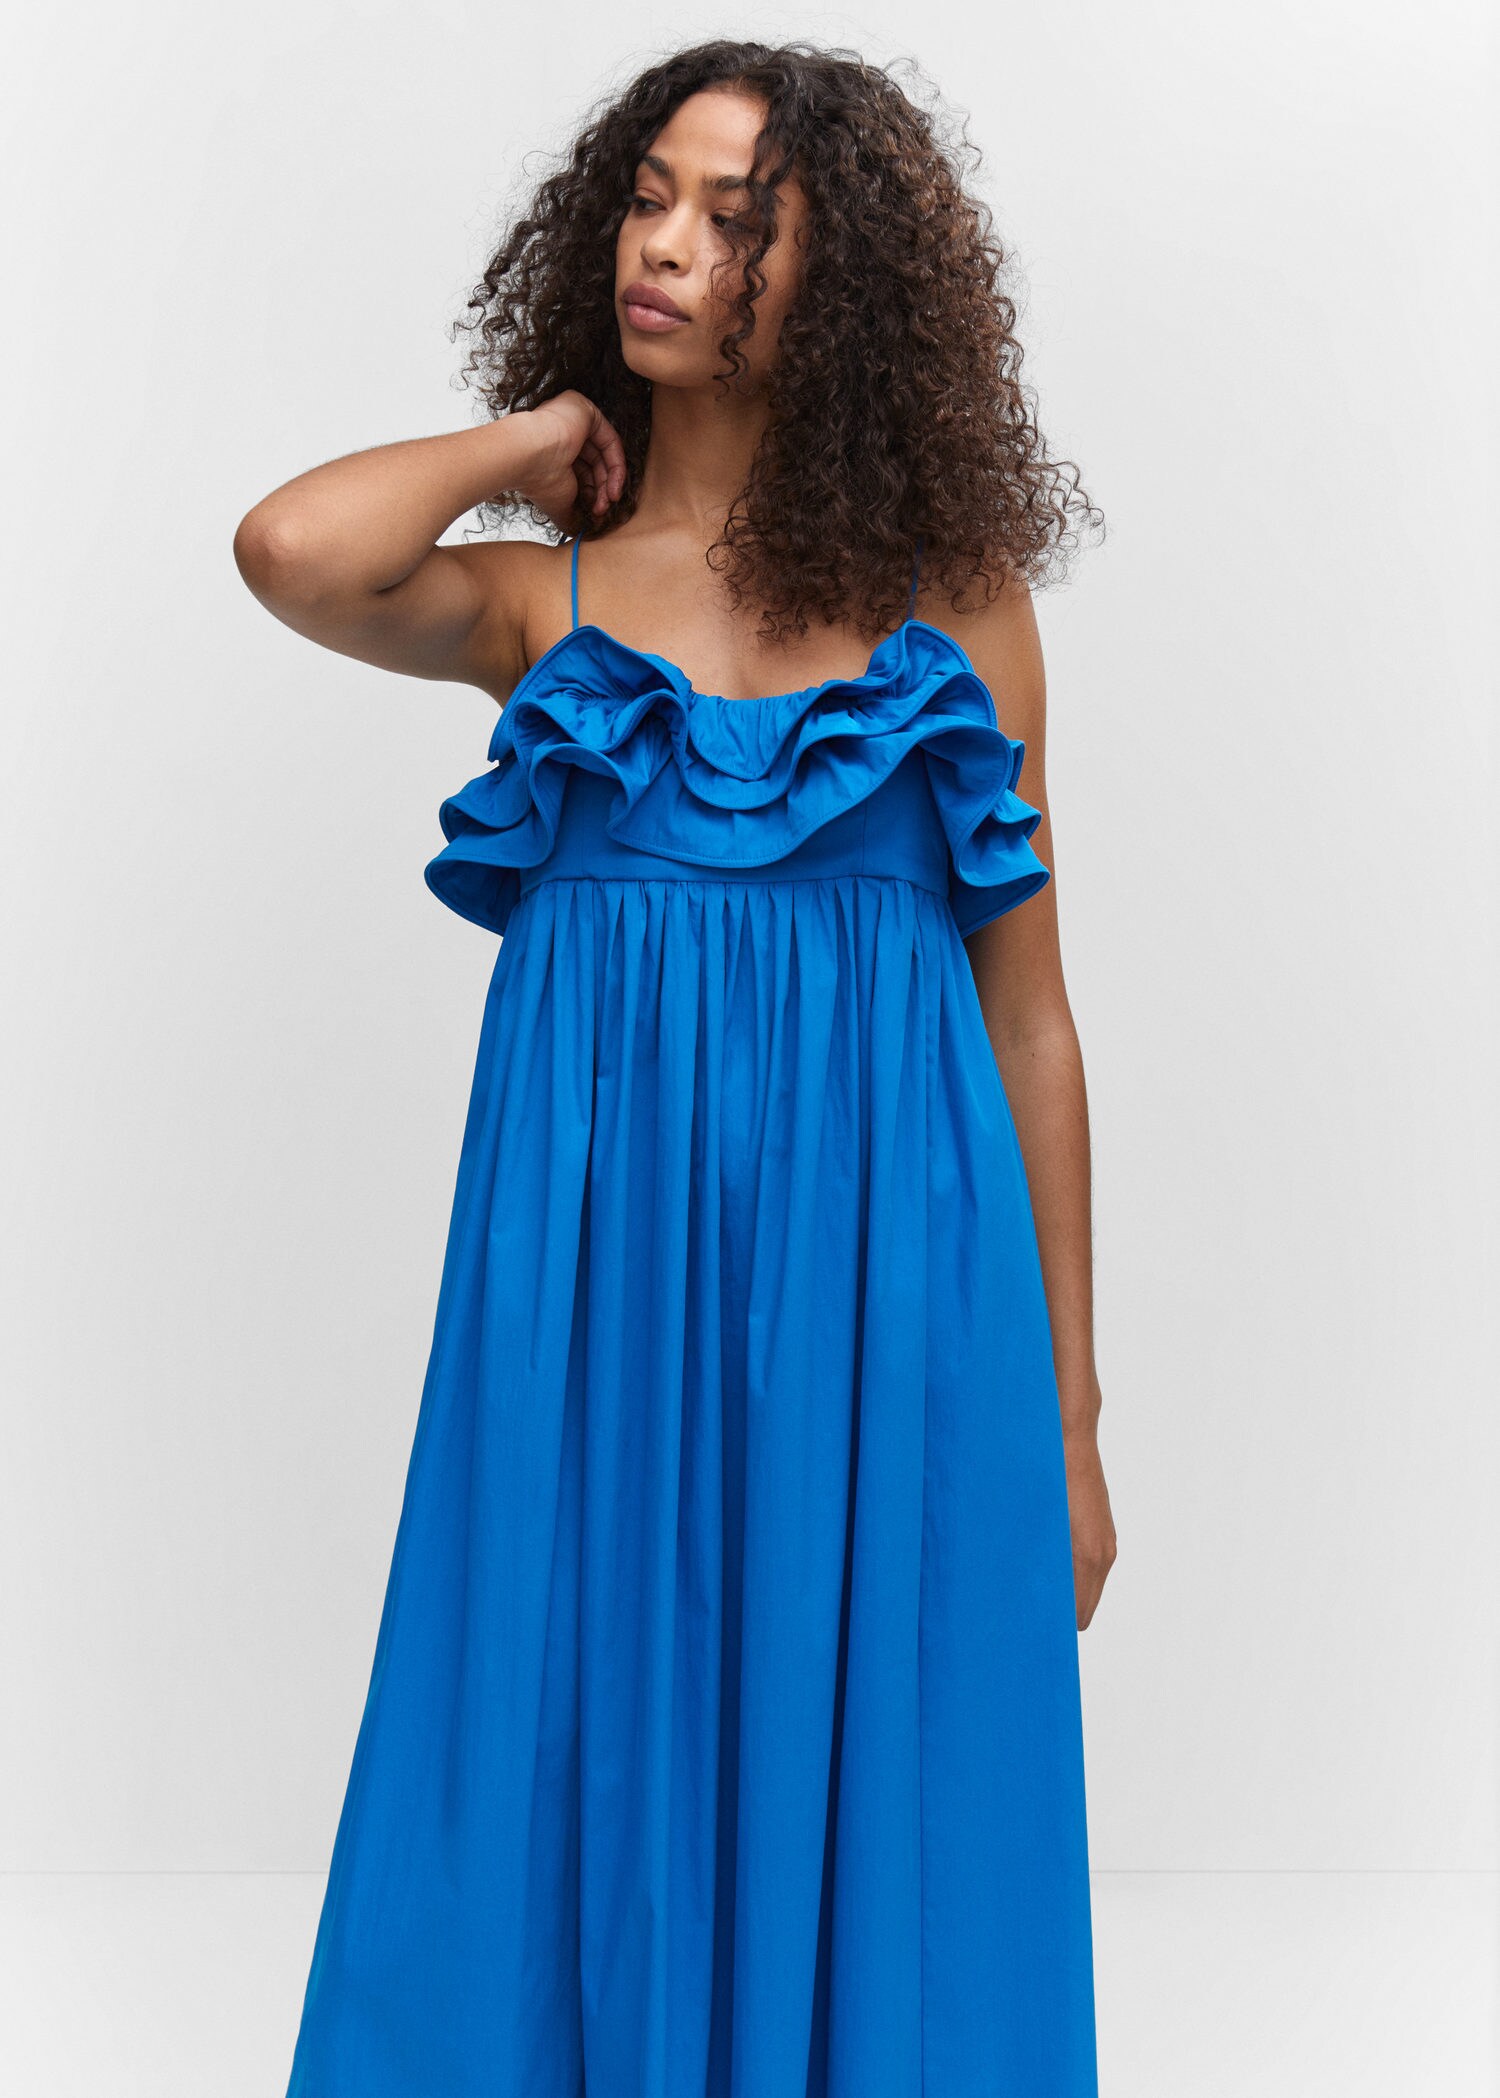 Buy Dorota Mahroon plane Dress for Women at Amazon.in